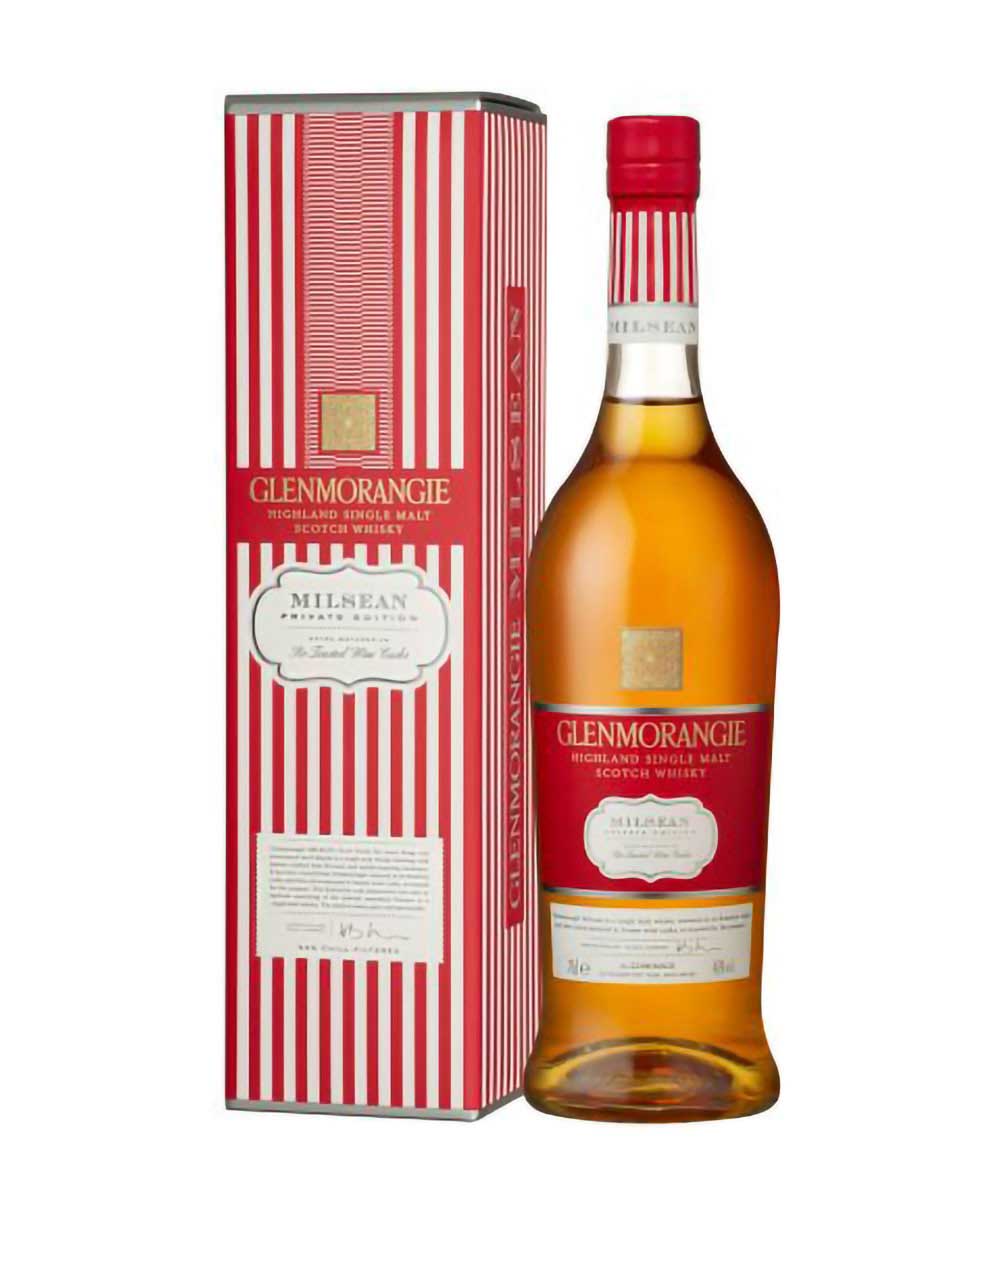 Glenmorangie Milsean Private Edition Single Malt Scotch Whisky